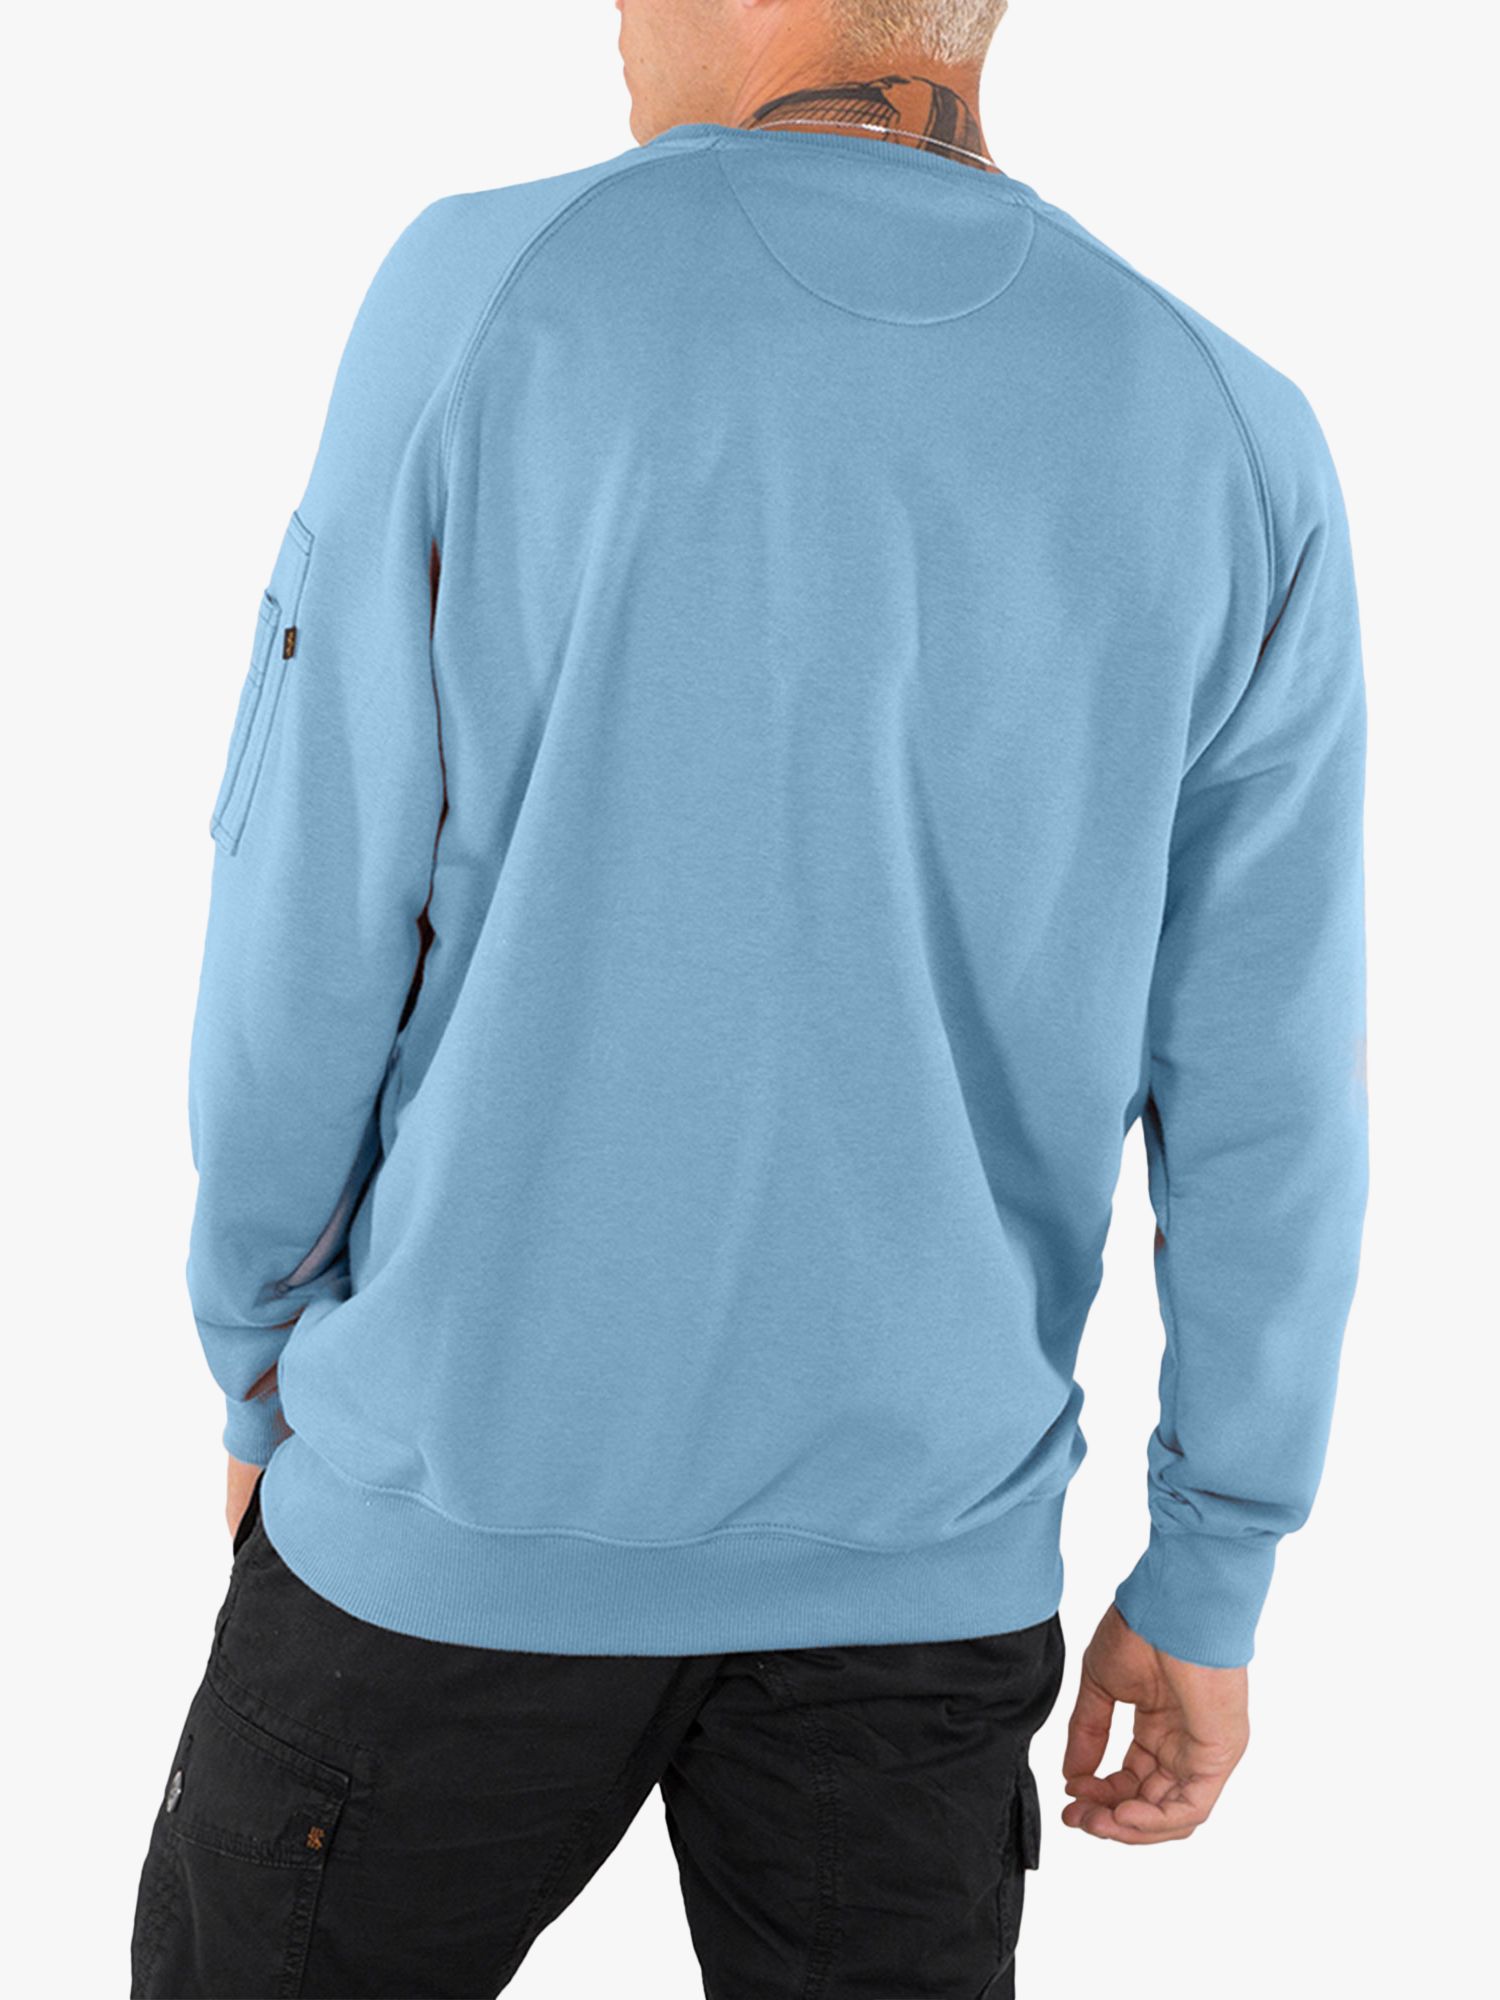 X-Fit & Partners Industries Pocket Lewis Sweatshirt, at Alpha Sleeve Zip Blue Light John